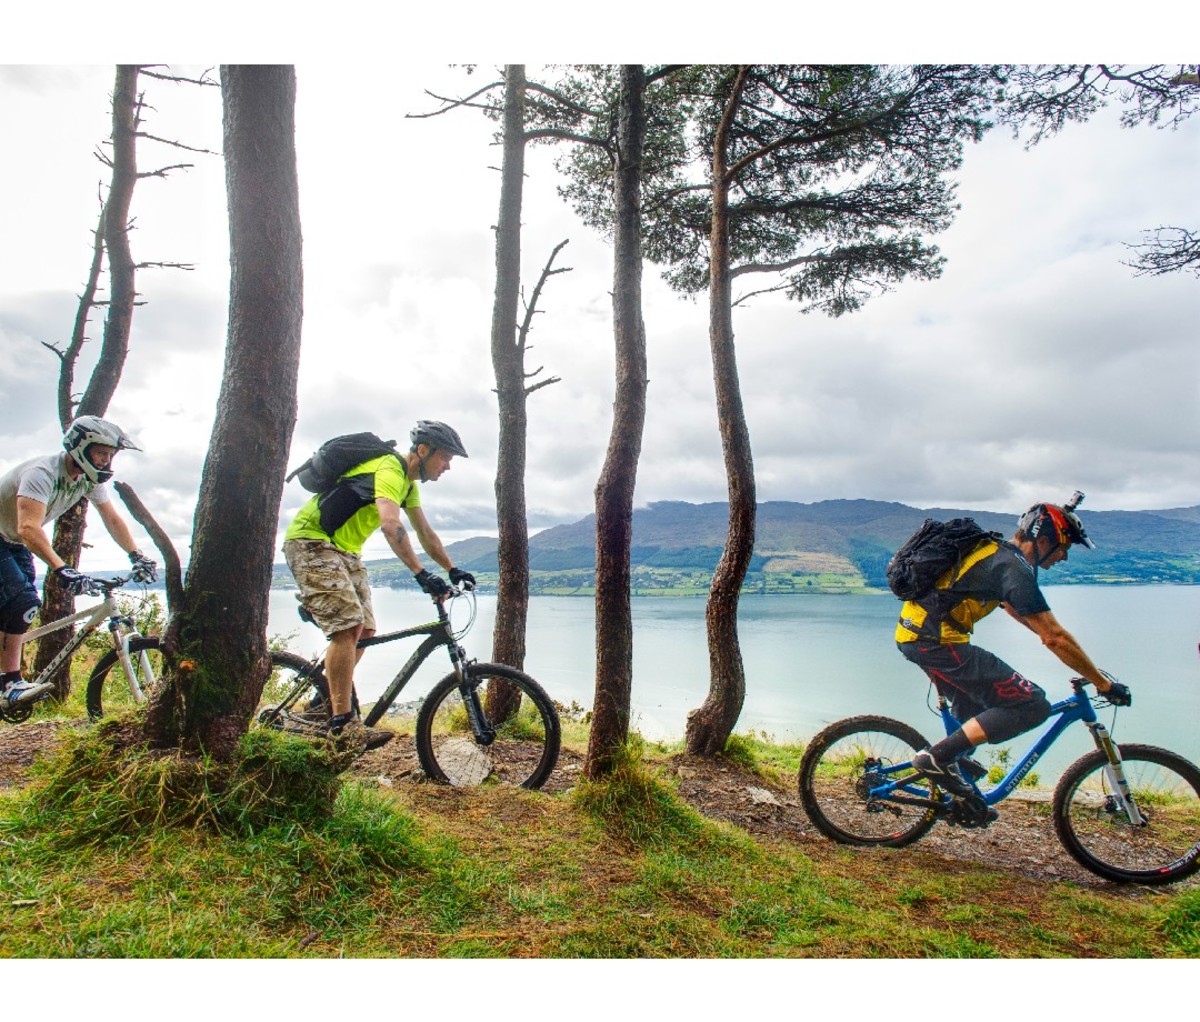 Three mountain bikers on the trail along the Irish coast.